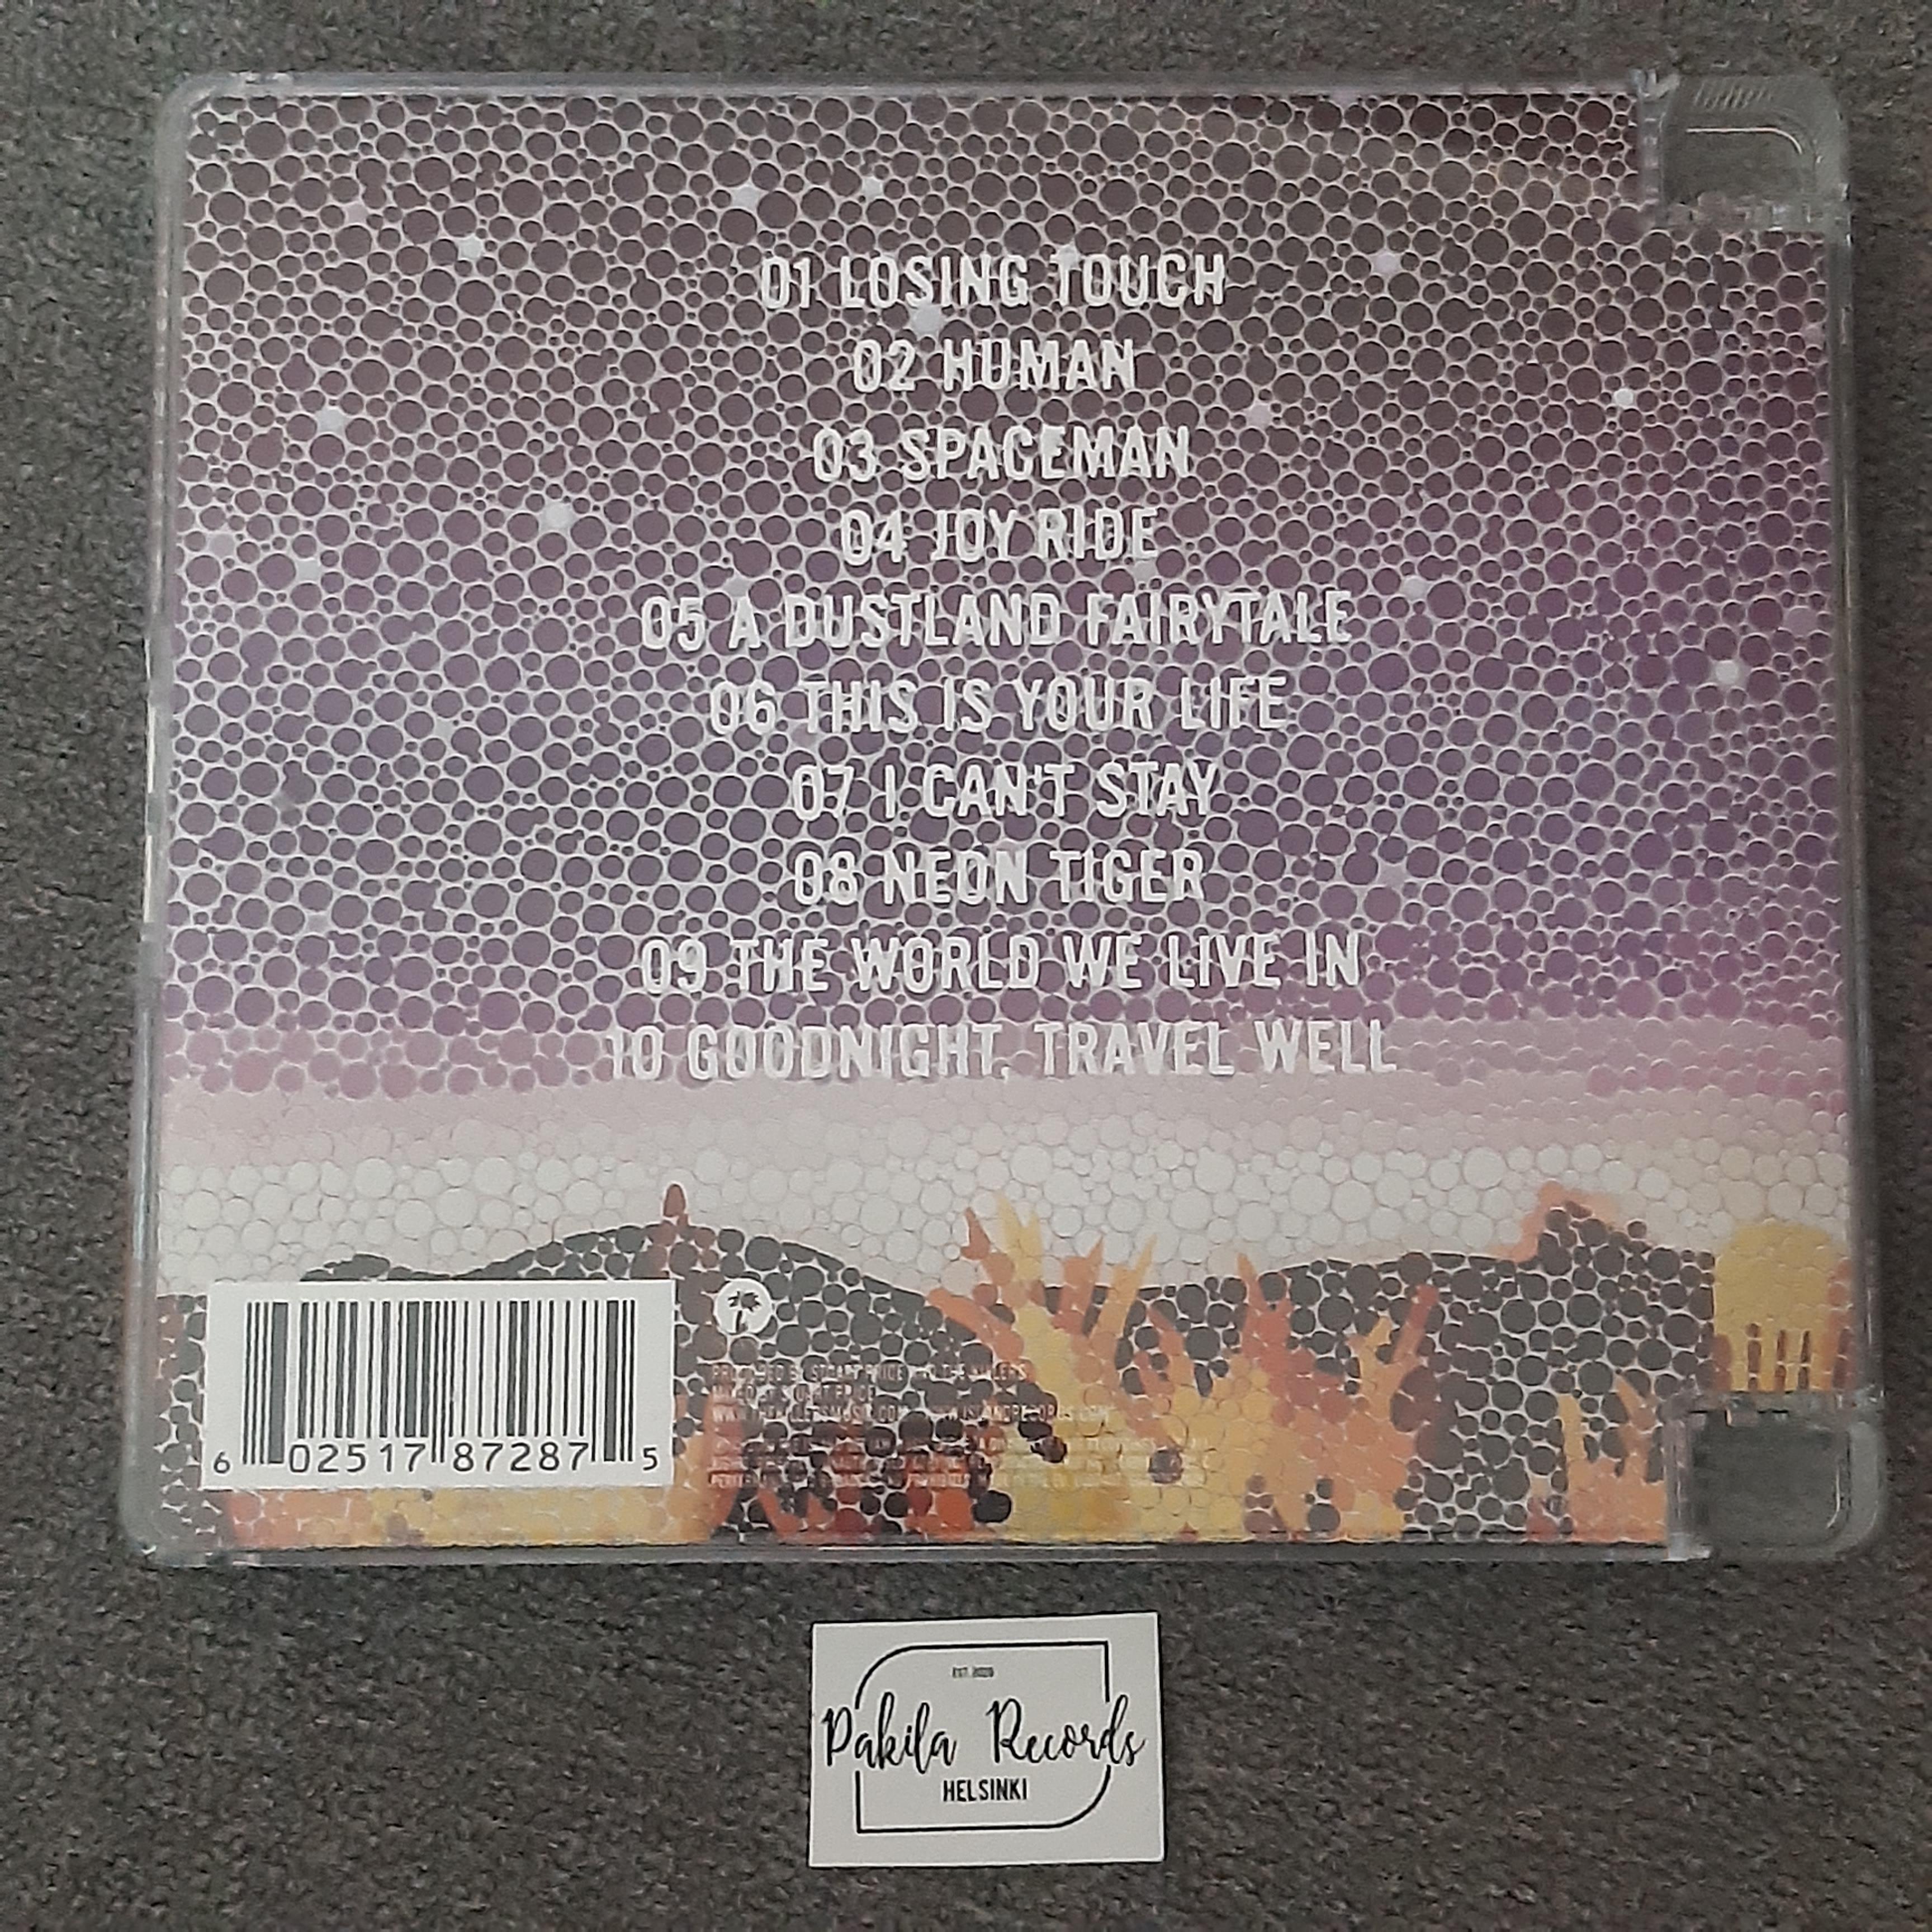 Killers - Day & Age - CD (käytetty)